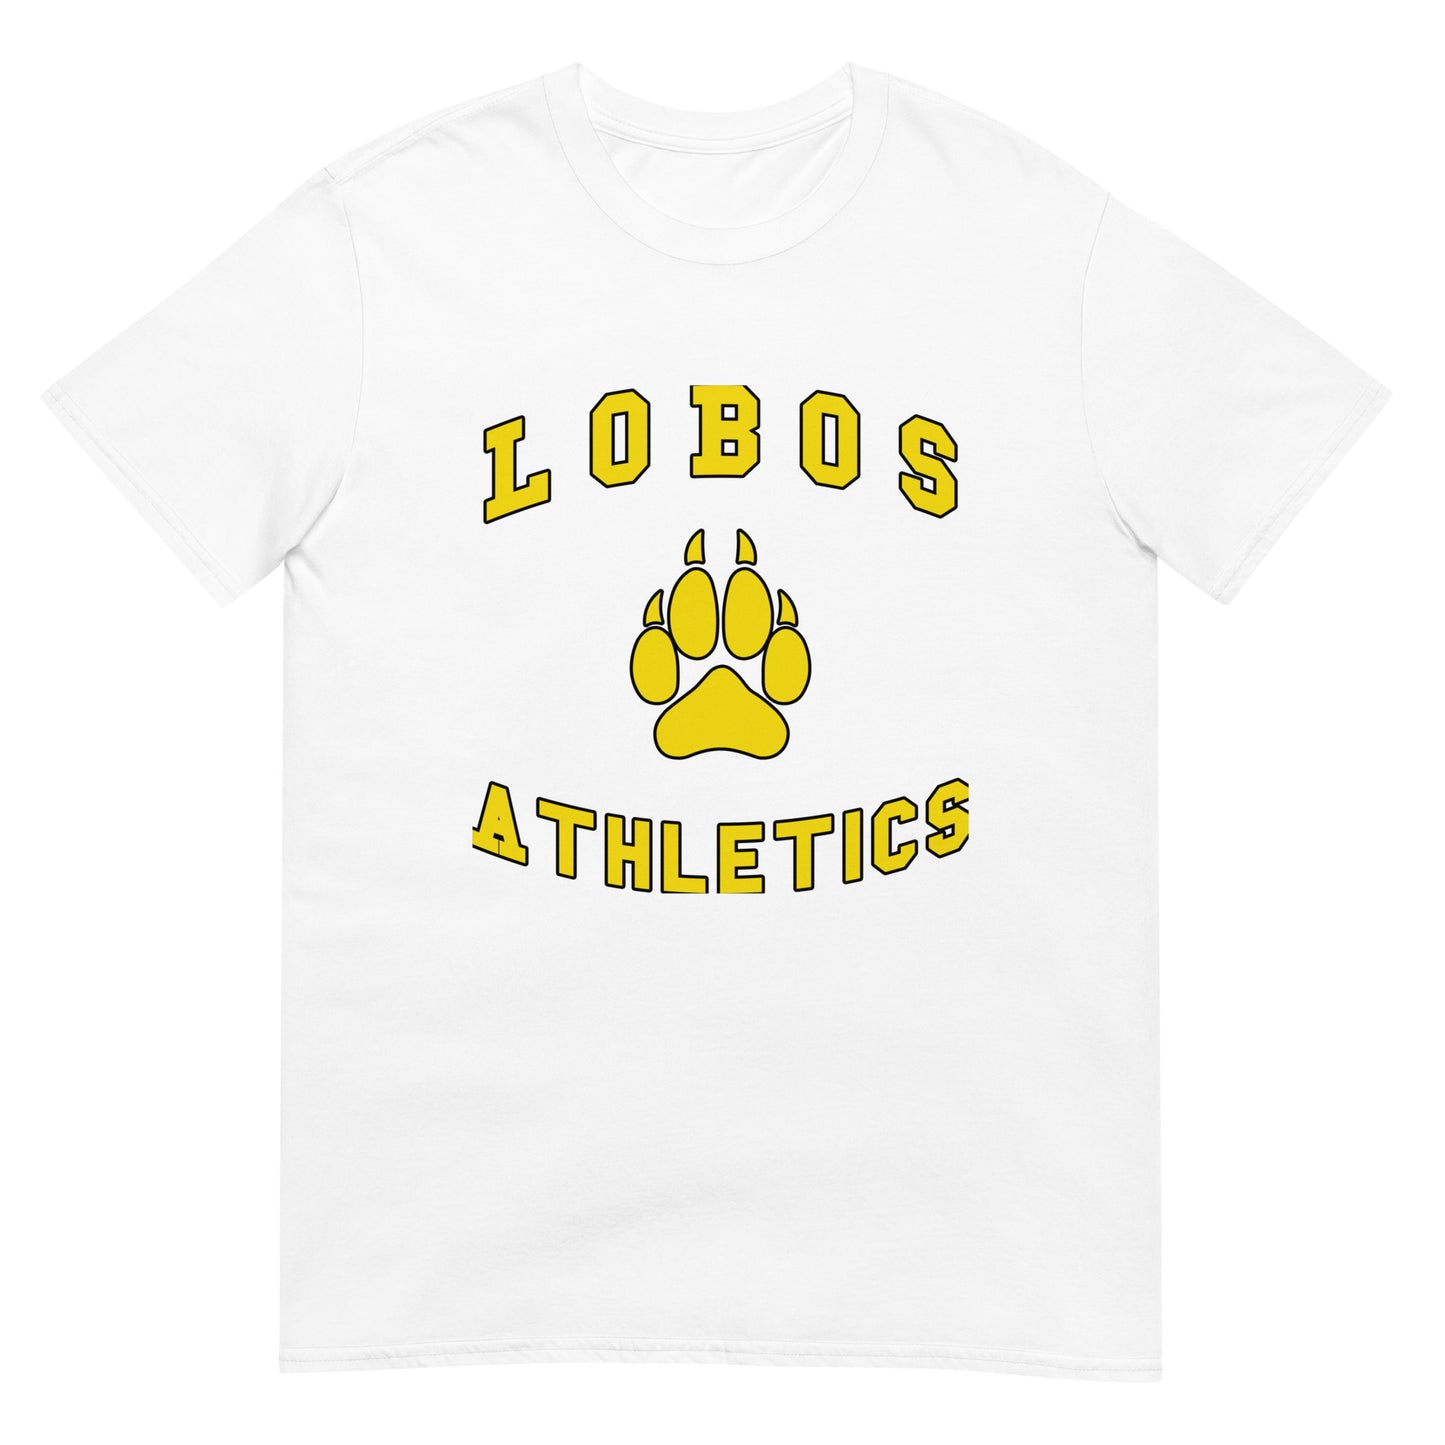 Lobos Short-Sleeve Unisex T-Shirt